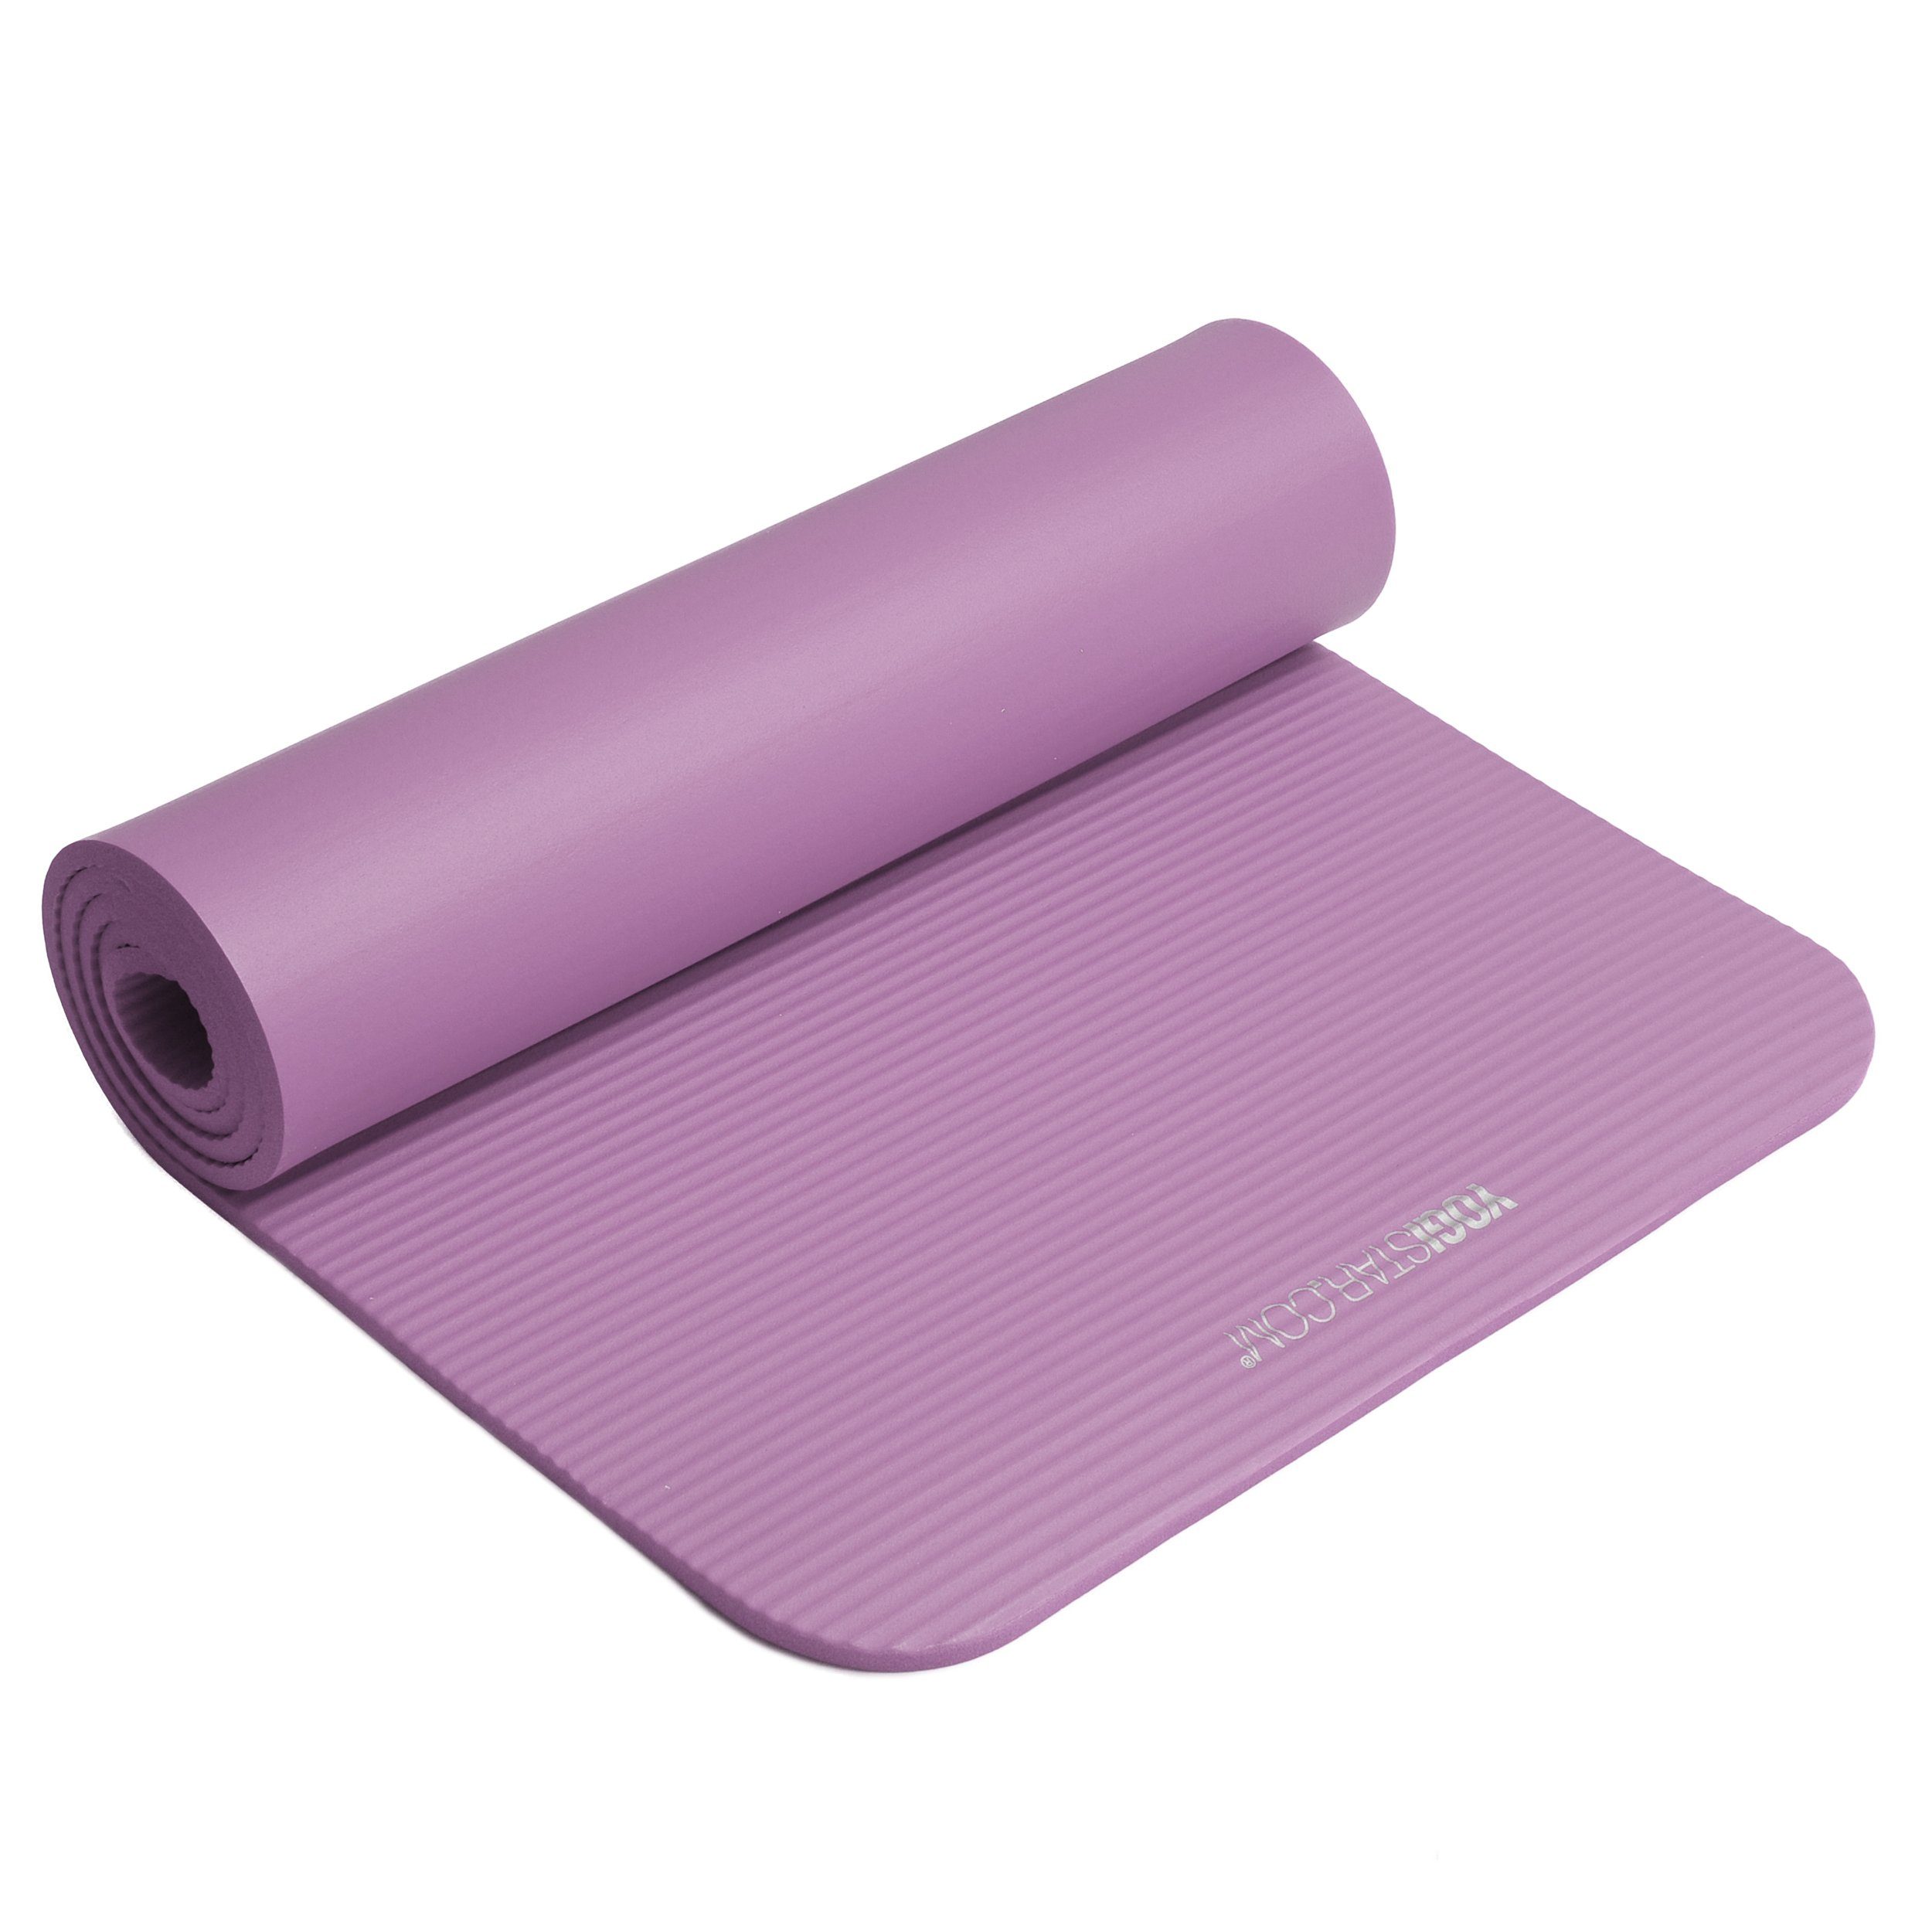 Gym Standard) 1-St., violett Yogistar Fitnessmatte (Standard, Fitnessmatte